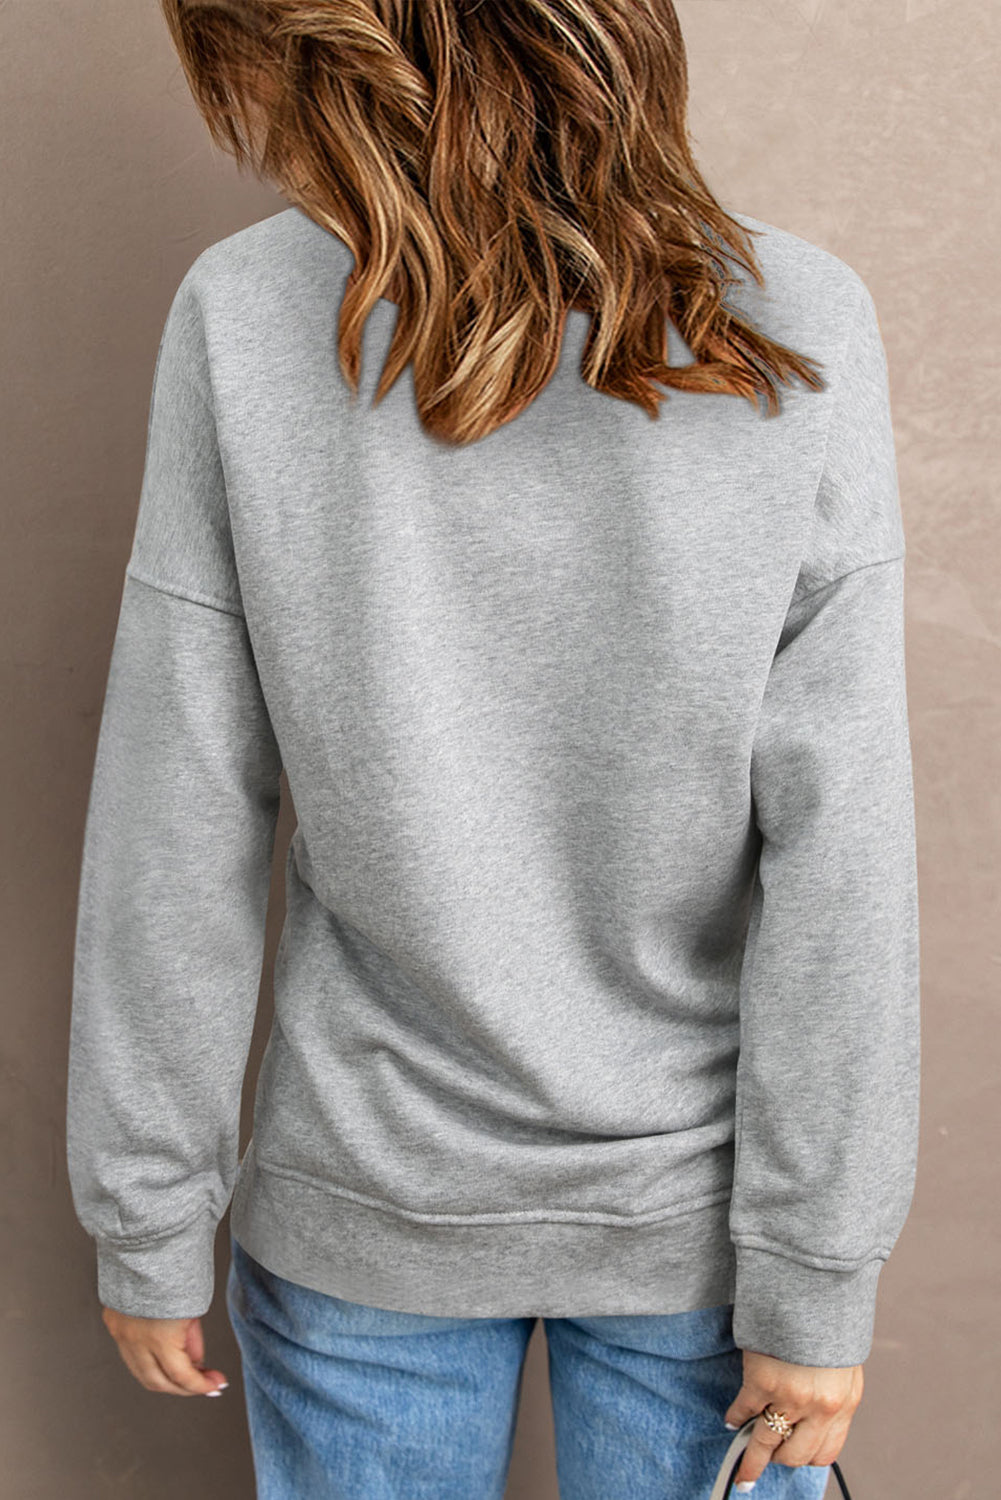 Gray Made in USA Print Long Sleeve Sweatshirt Graphic Sweatshirts JT's Designer Fashion